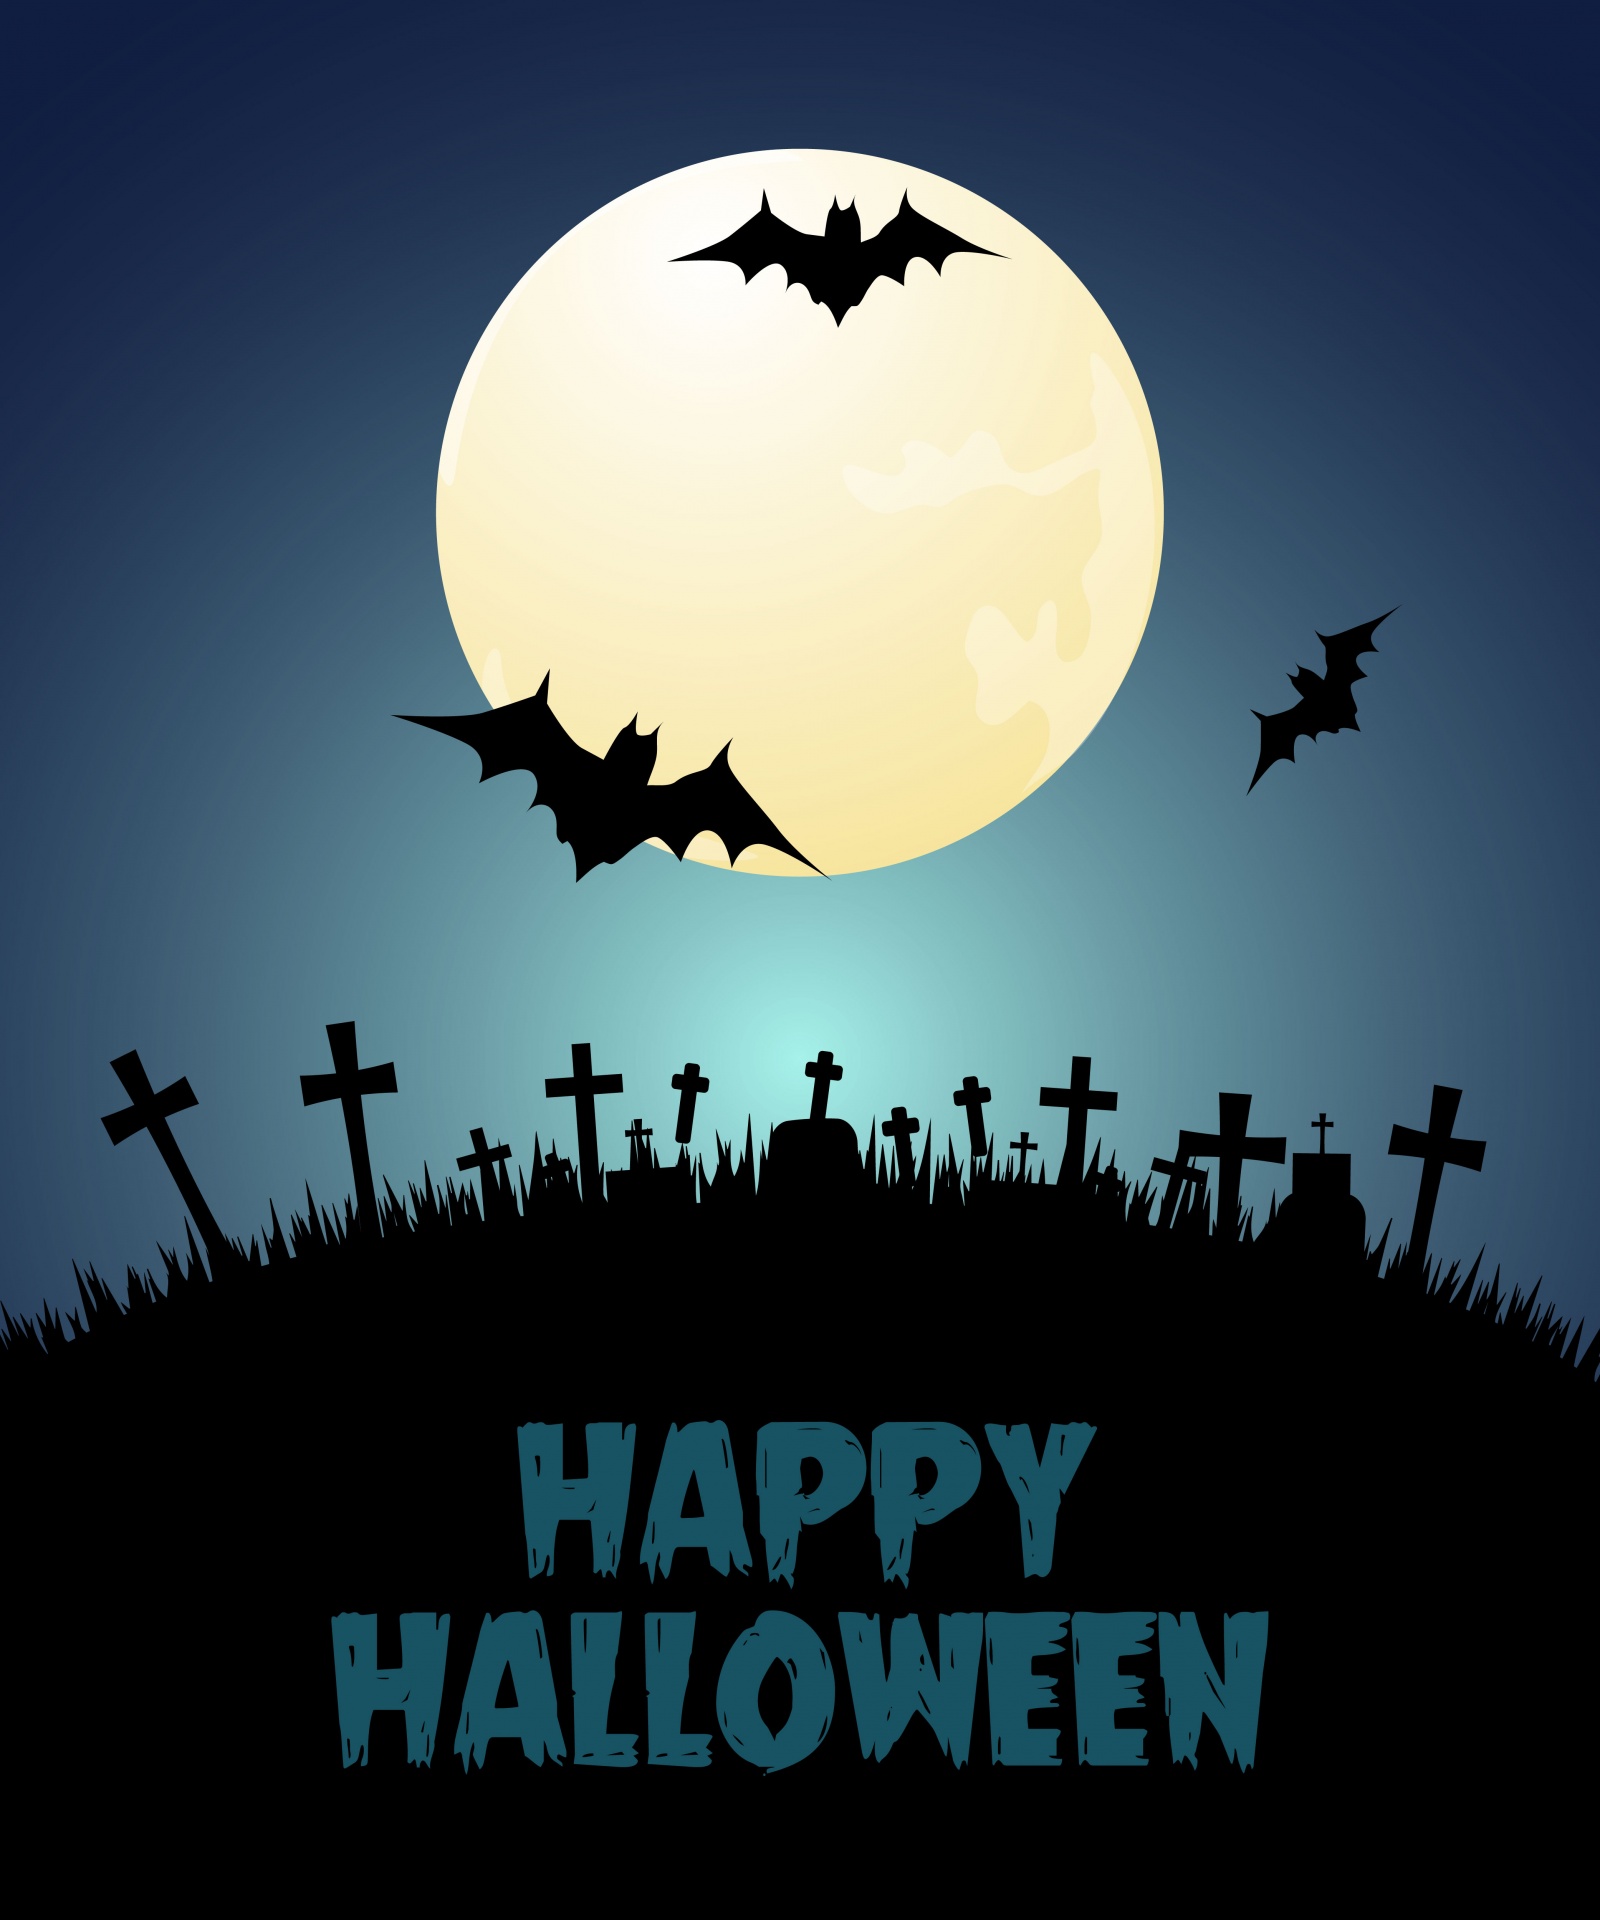 Halloween Background Poster Invite